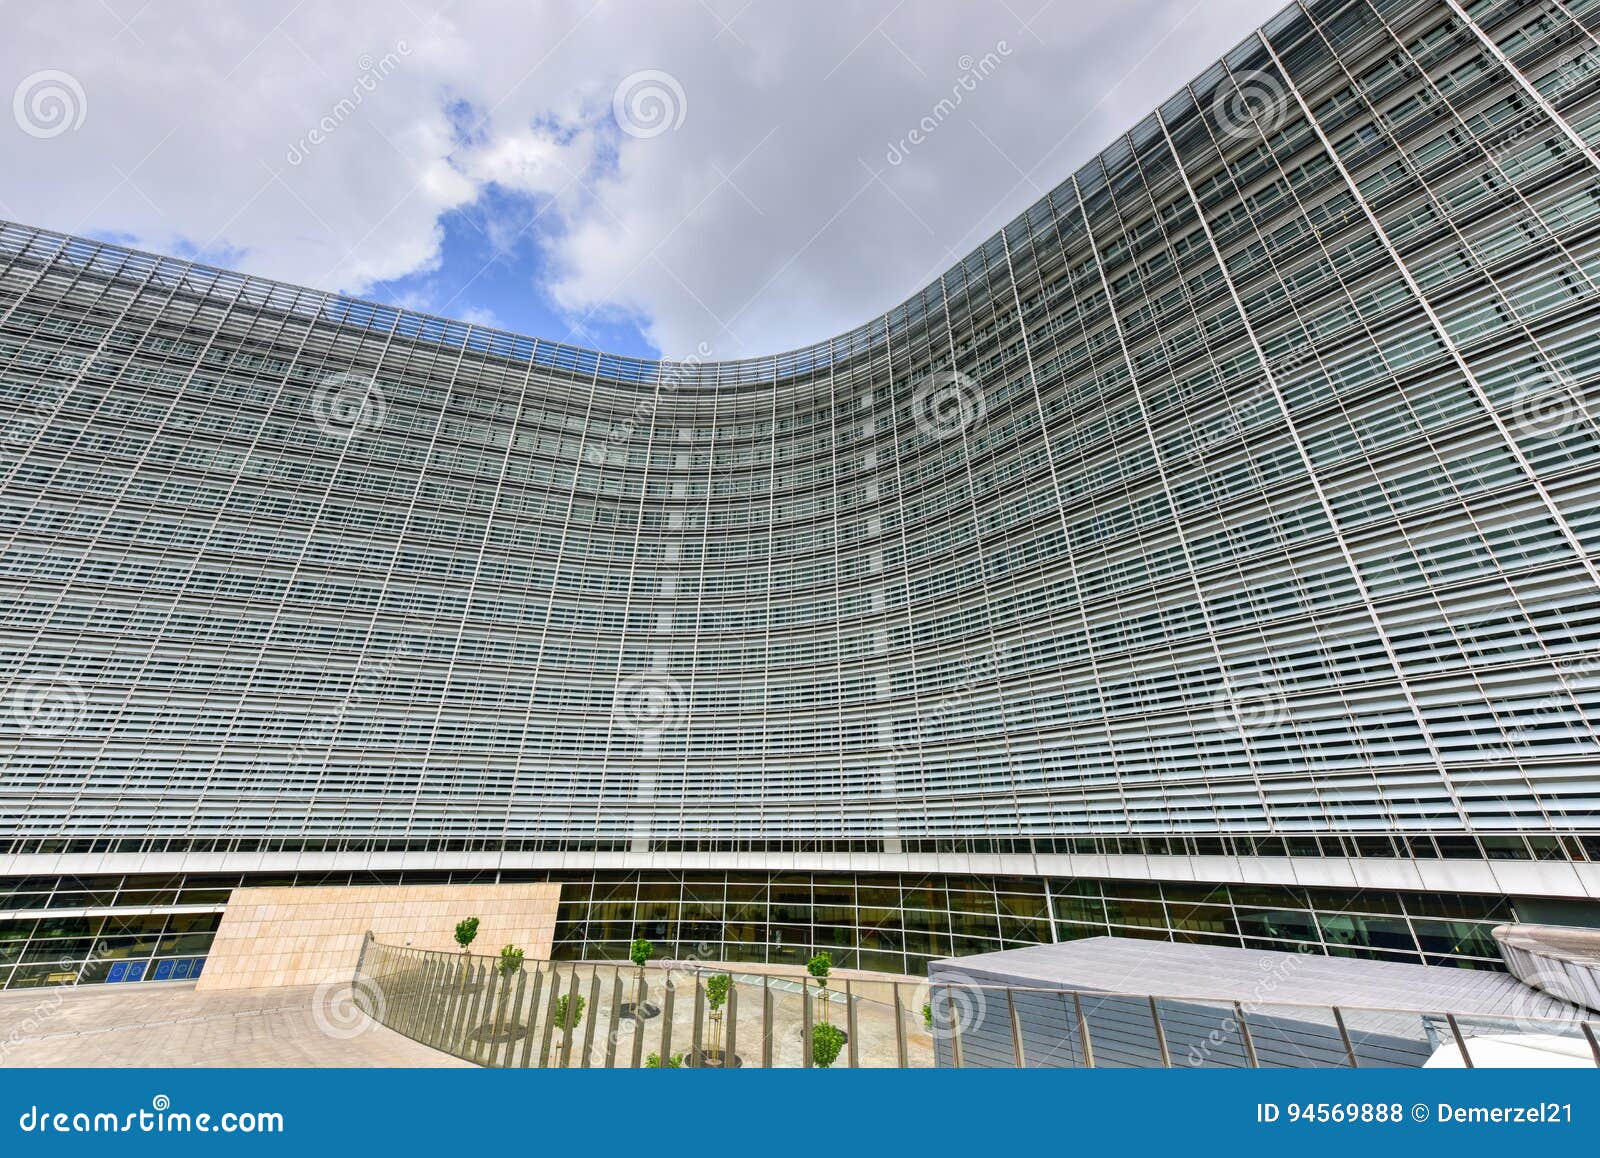 berlaymont building - brussels, belgium